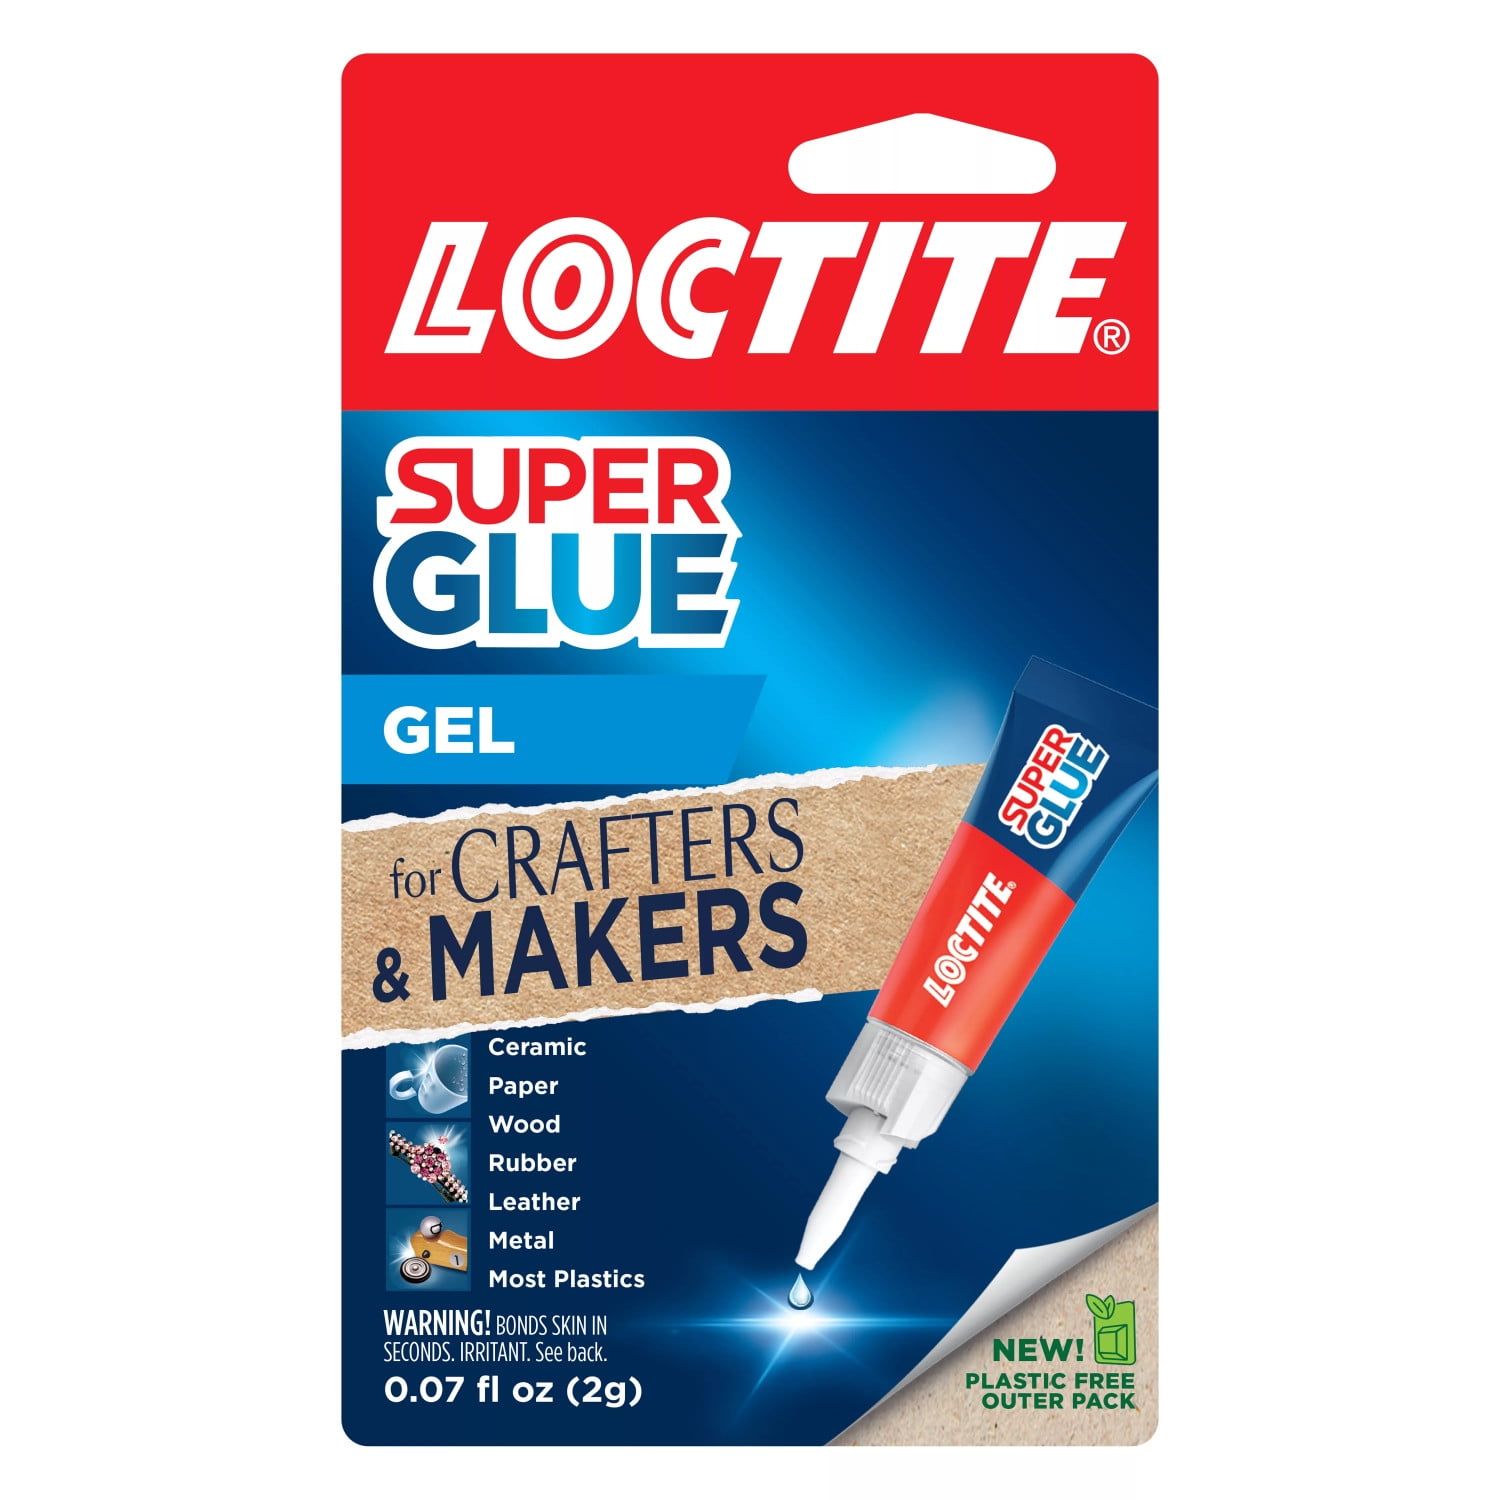 Loctite Glass Glue, 0.07 oz, 6, Tube